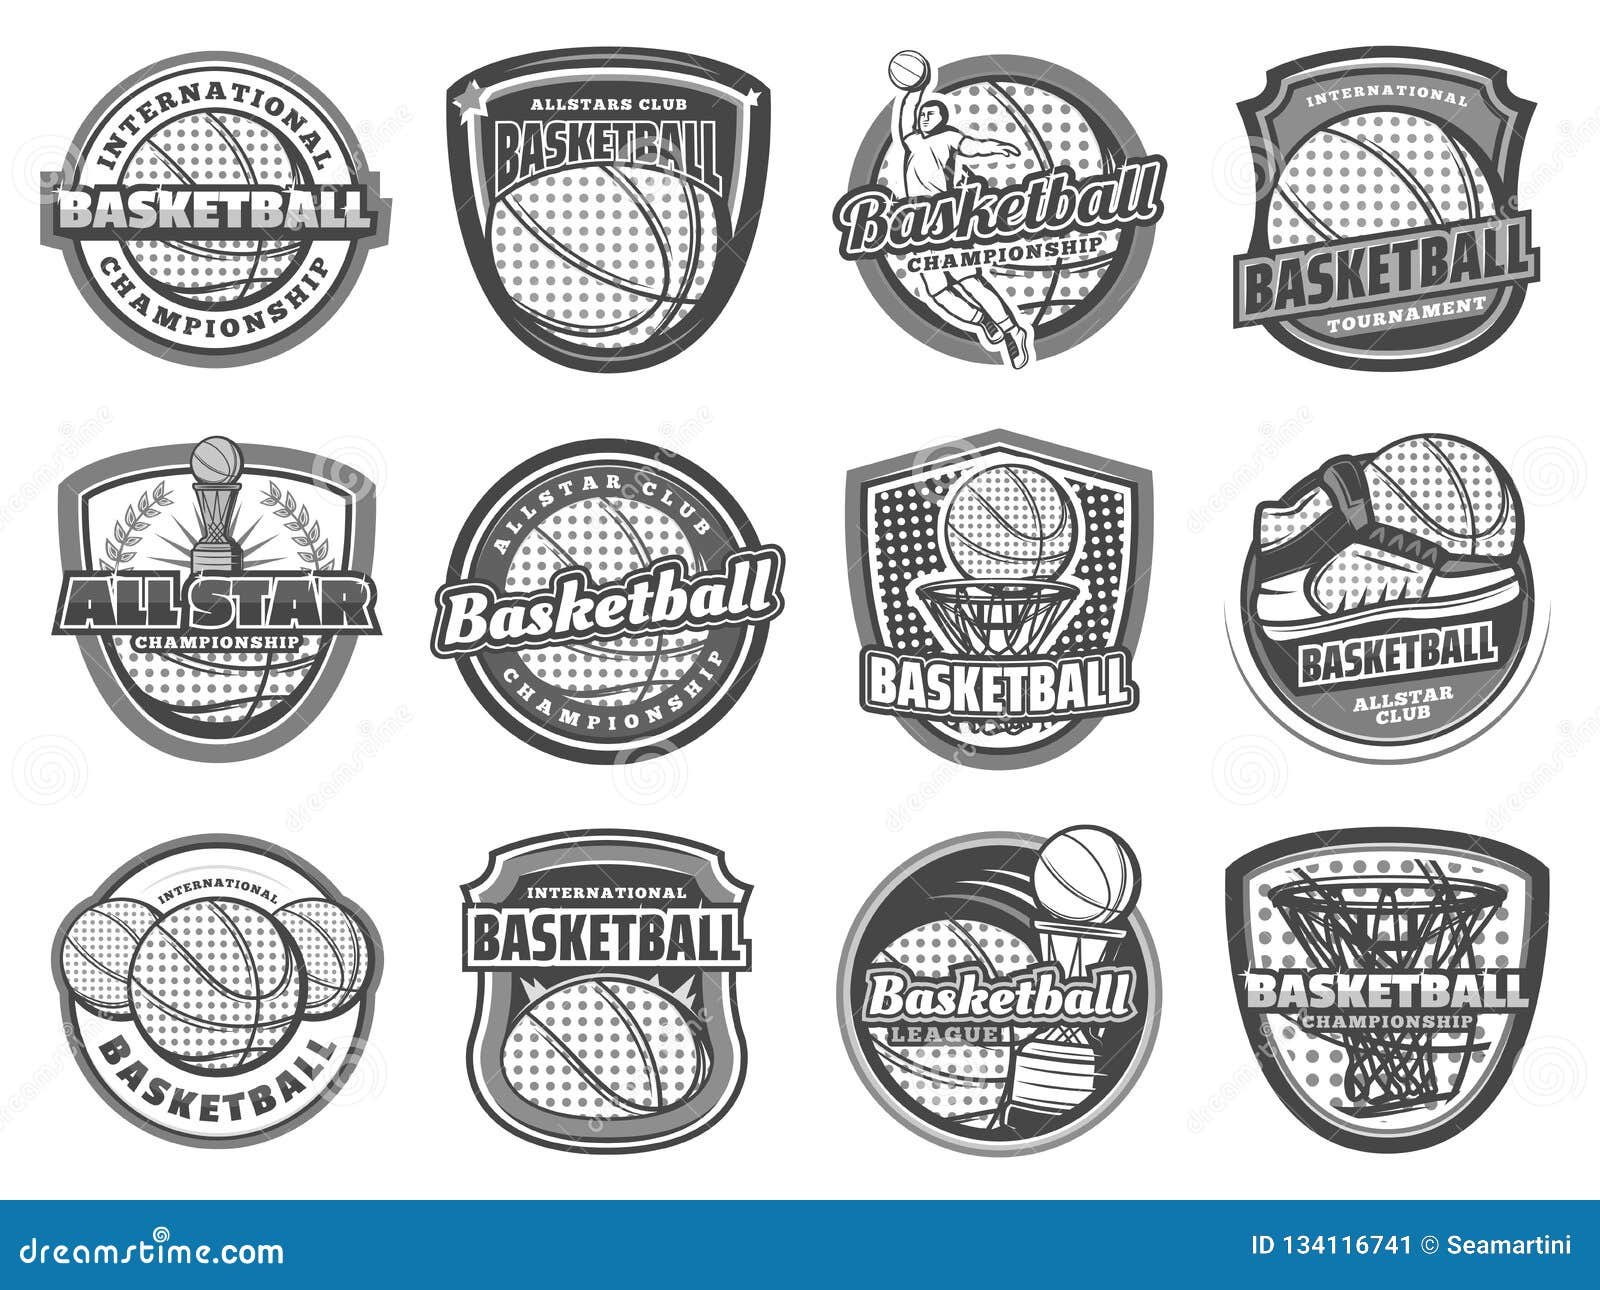 Basketball Ball - Free sports icons